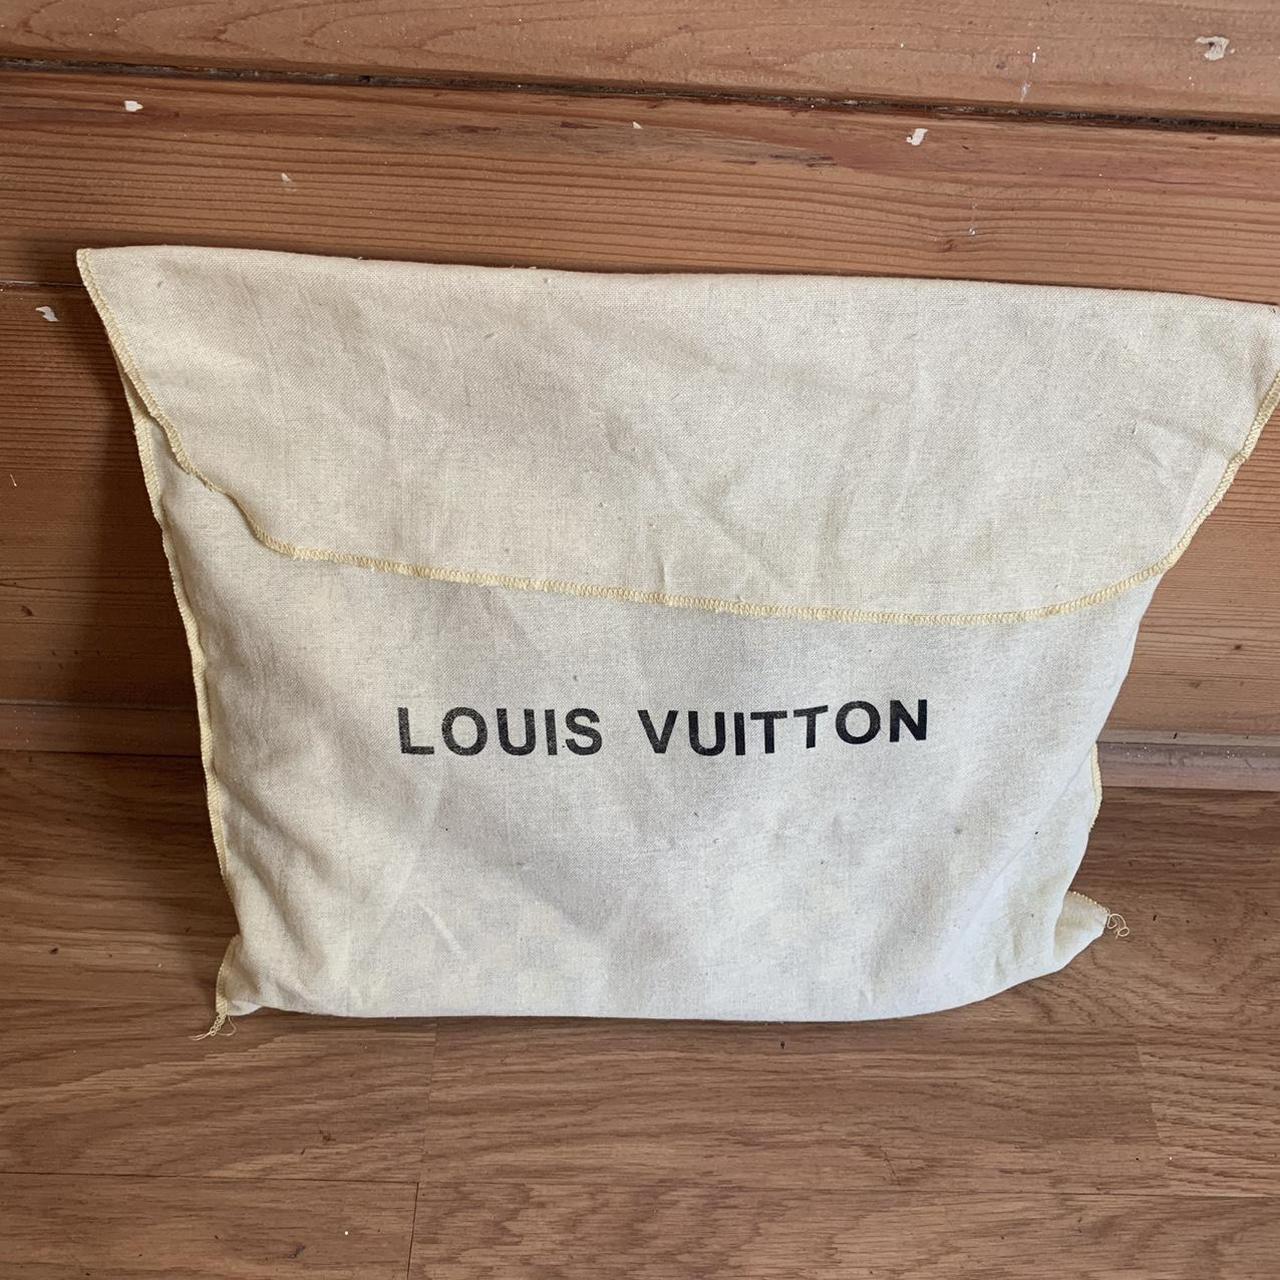 louis vuitton dust bag 9.25 x 15.75 inches no flaws - Depop